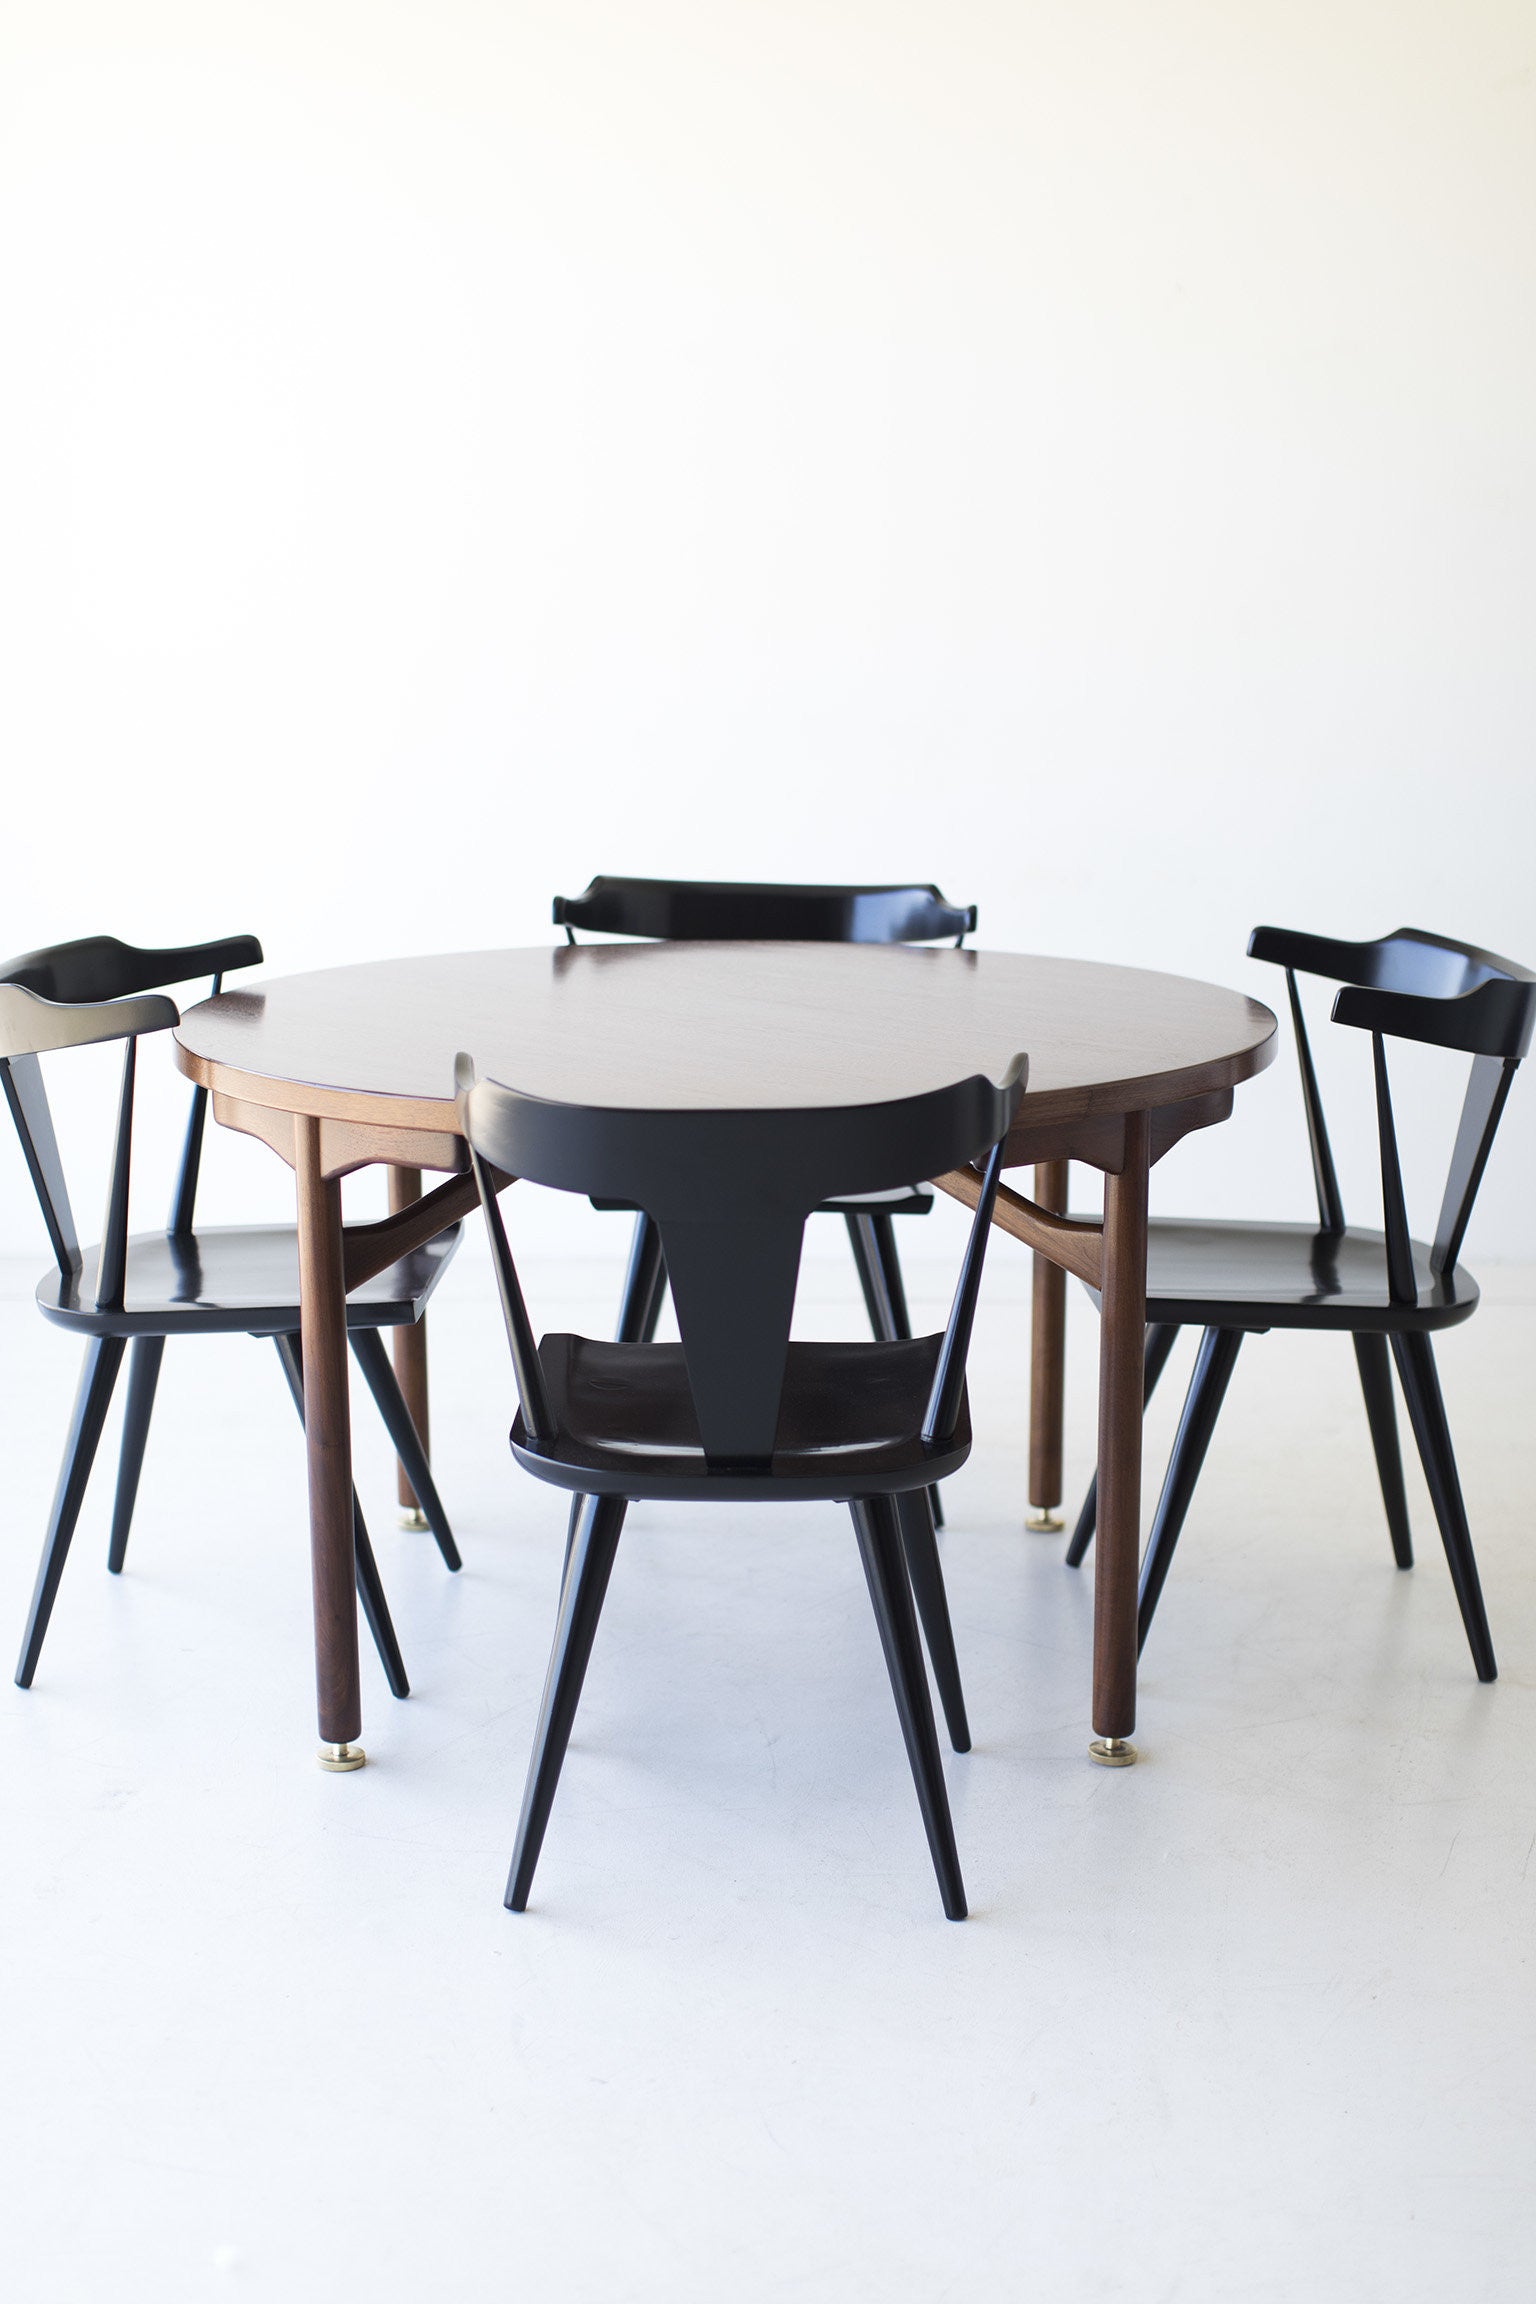 Jens Risom Dining Table for Jens Risom Design Inc. - 05191702